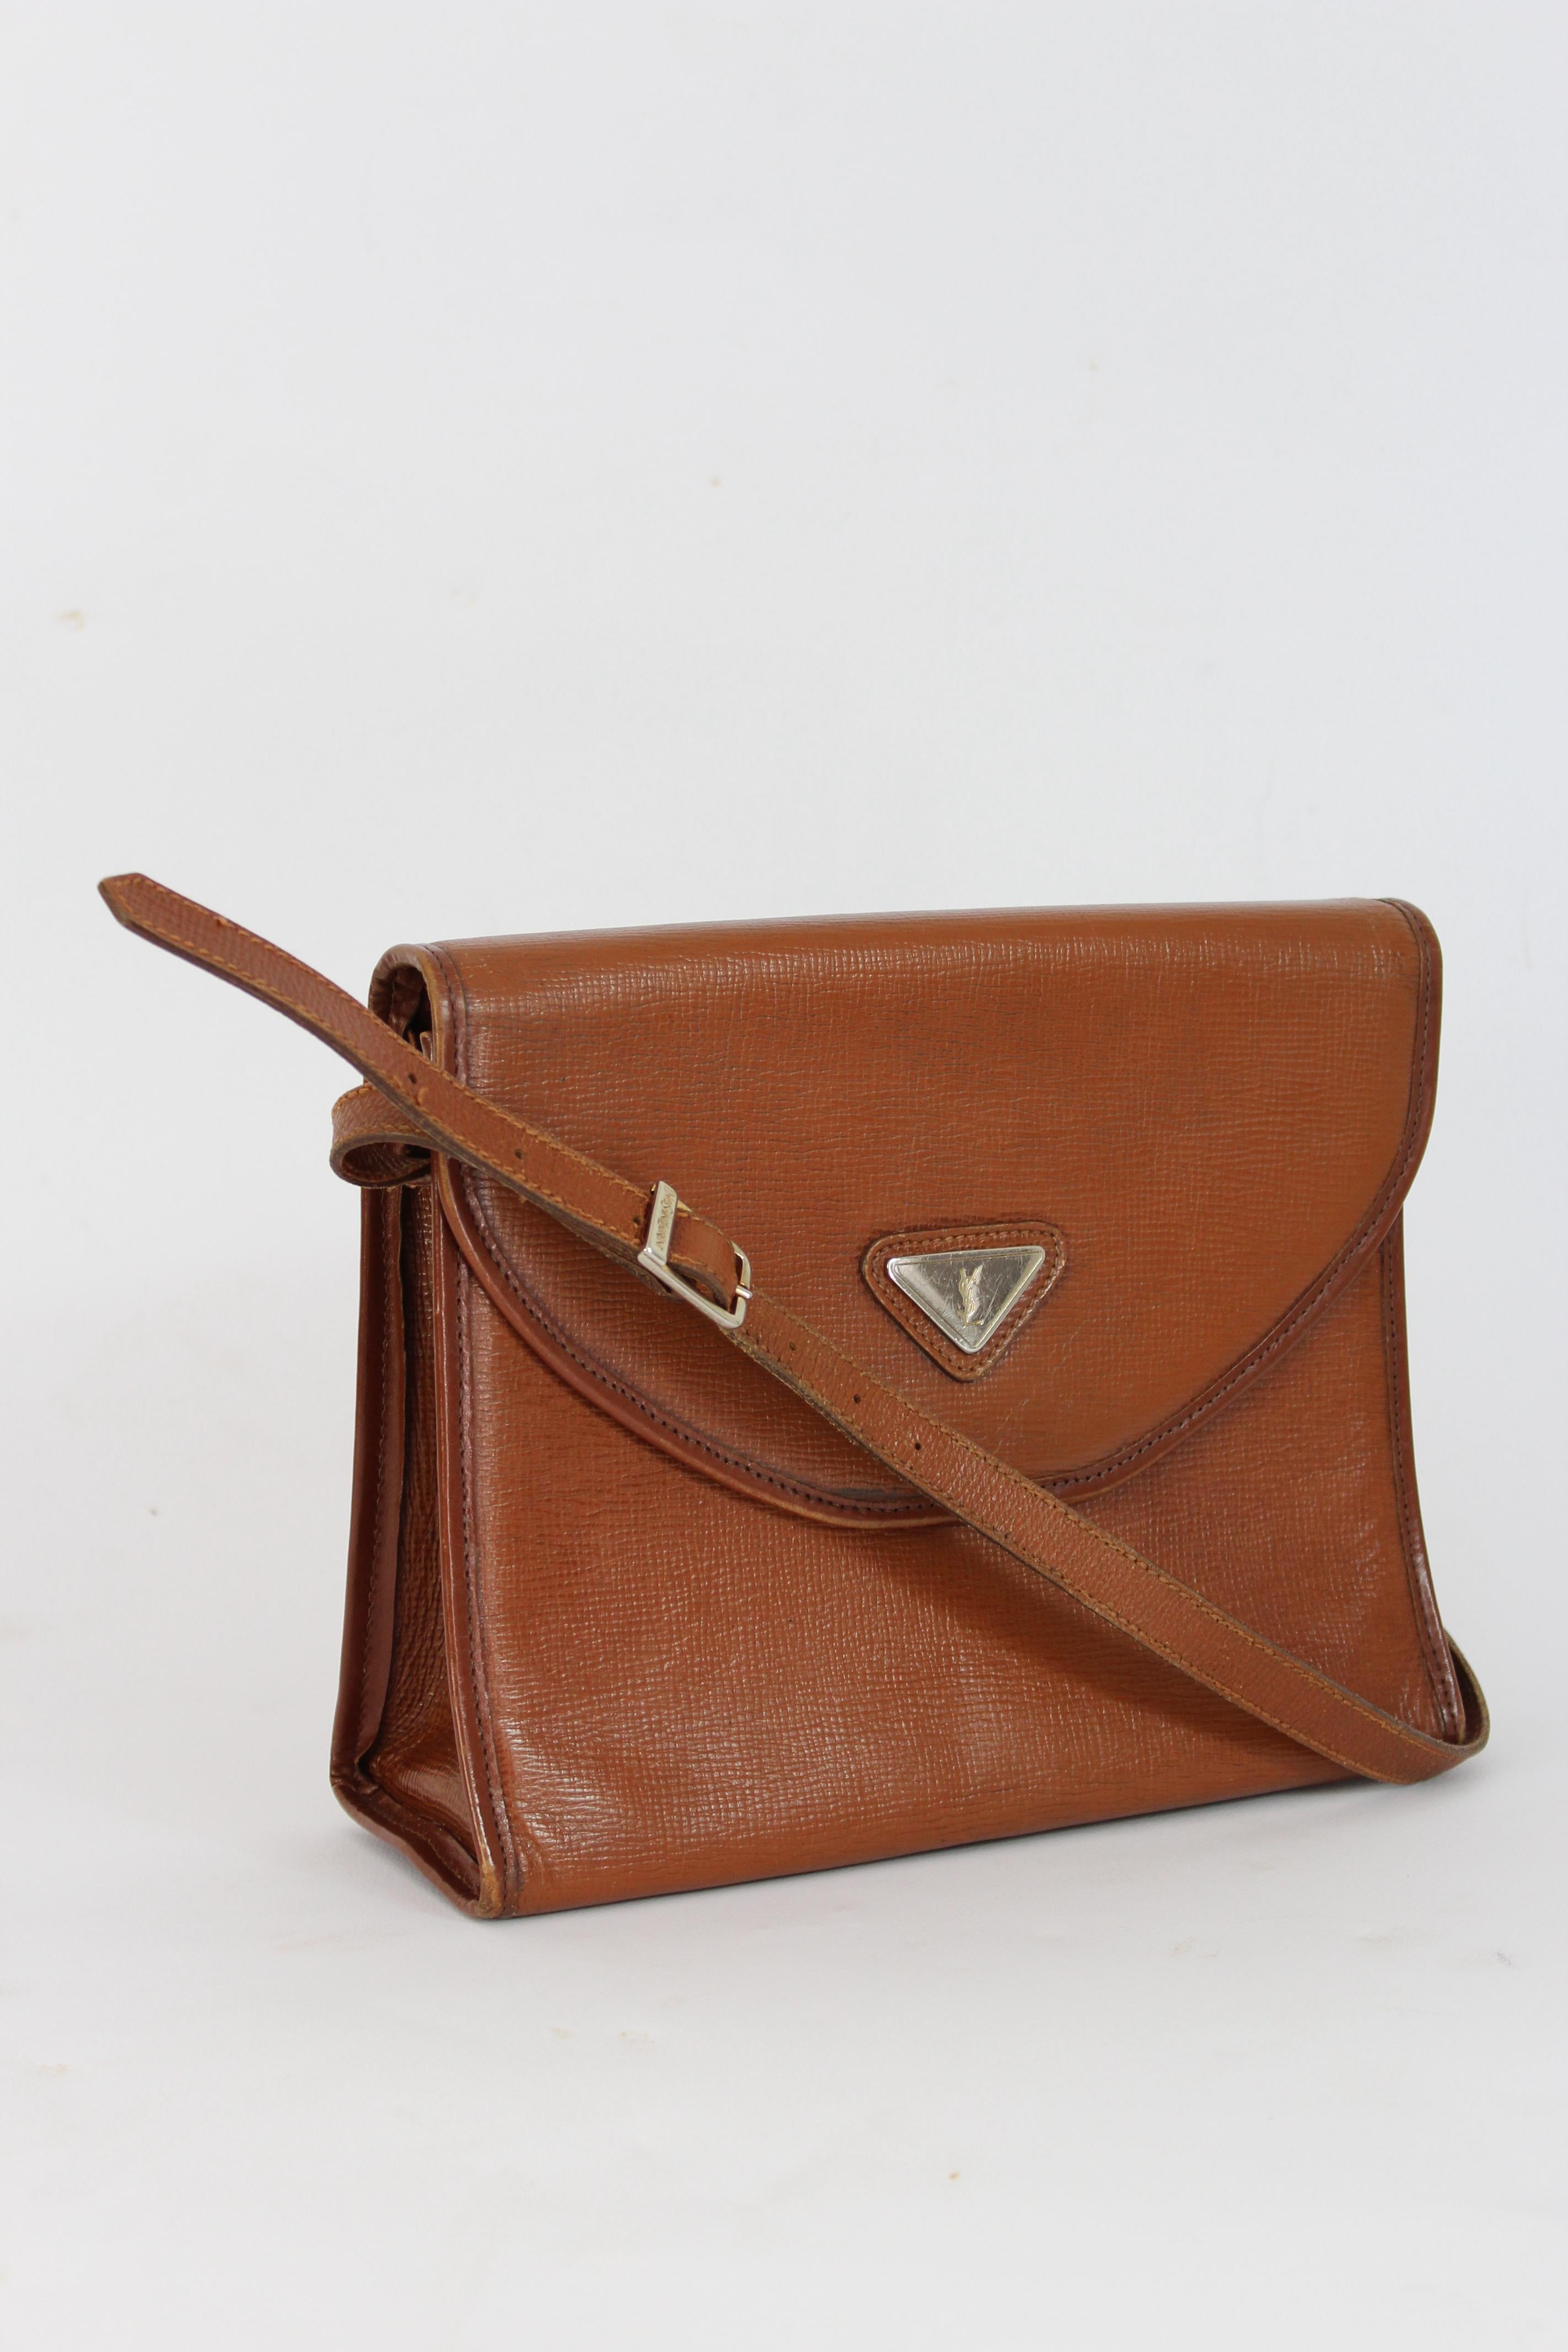 Women's Yves Saint Laurent Brown Leather Shoulder Bag 1980s 